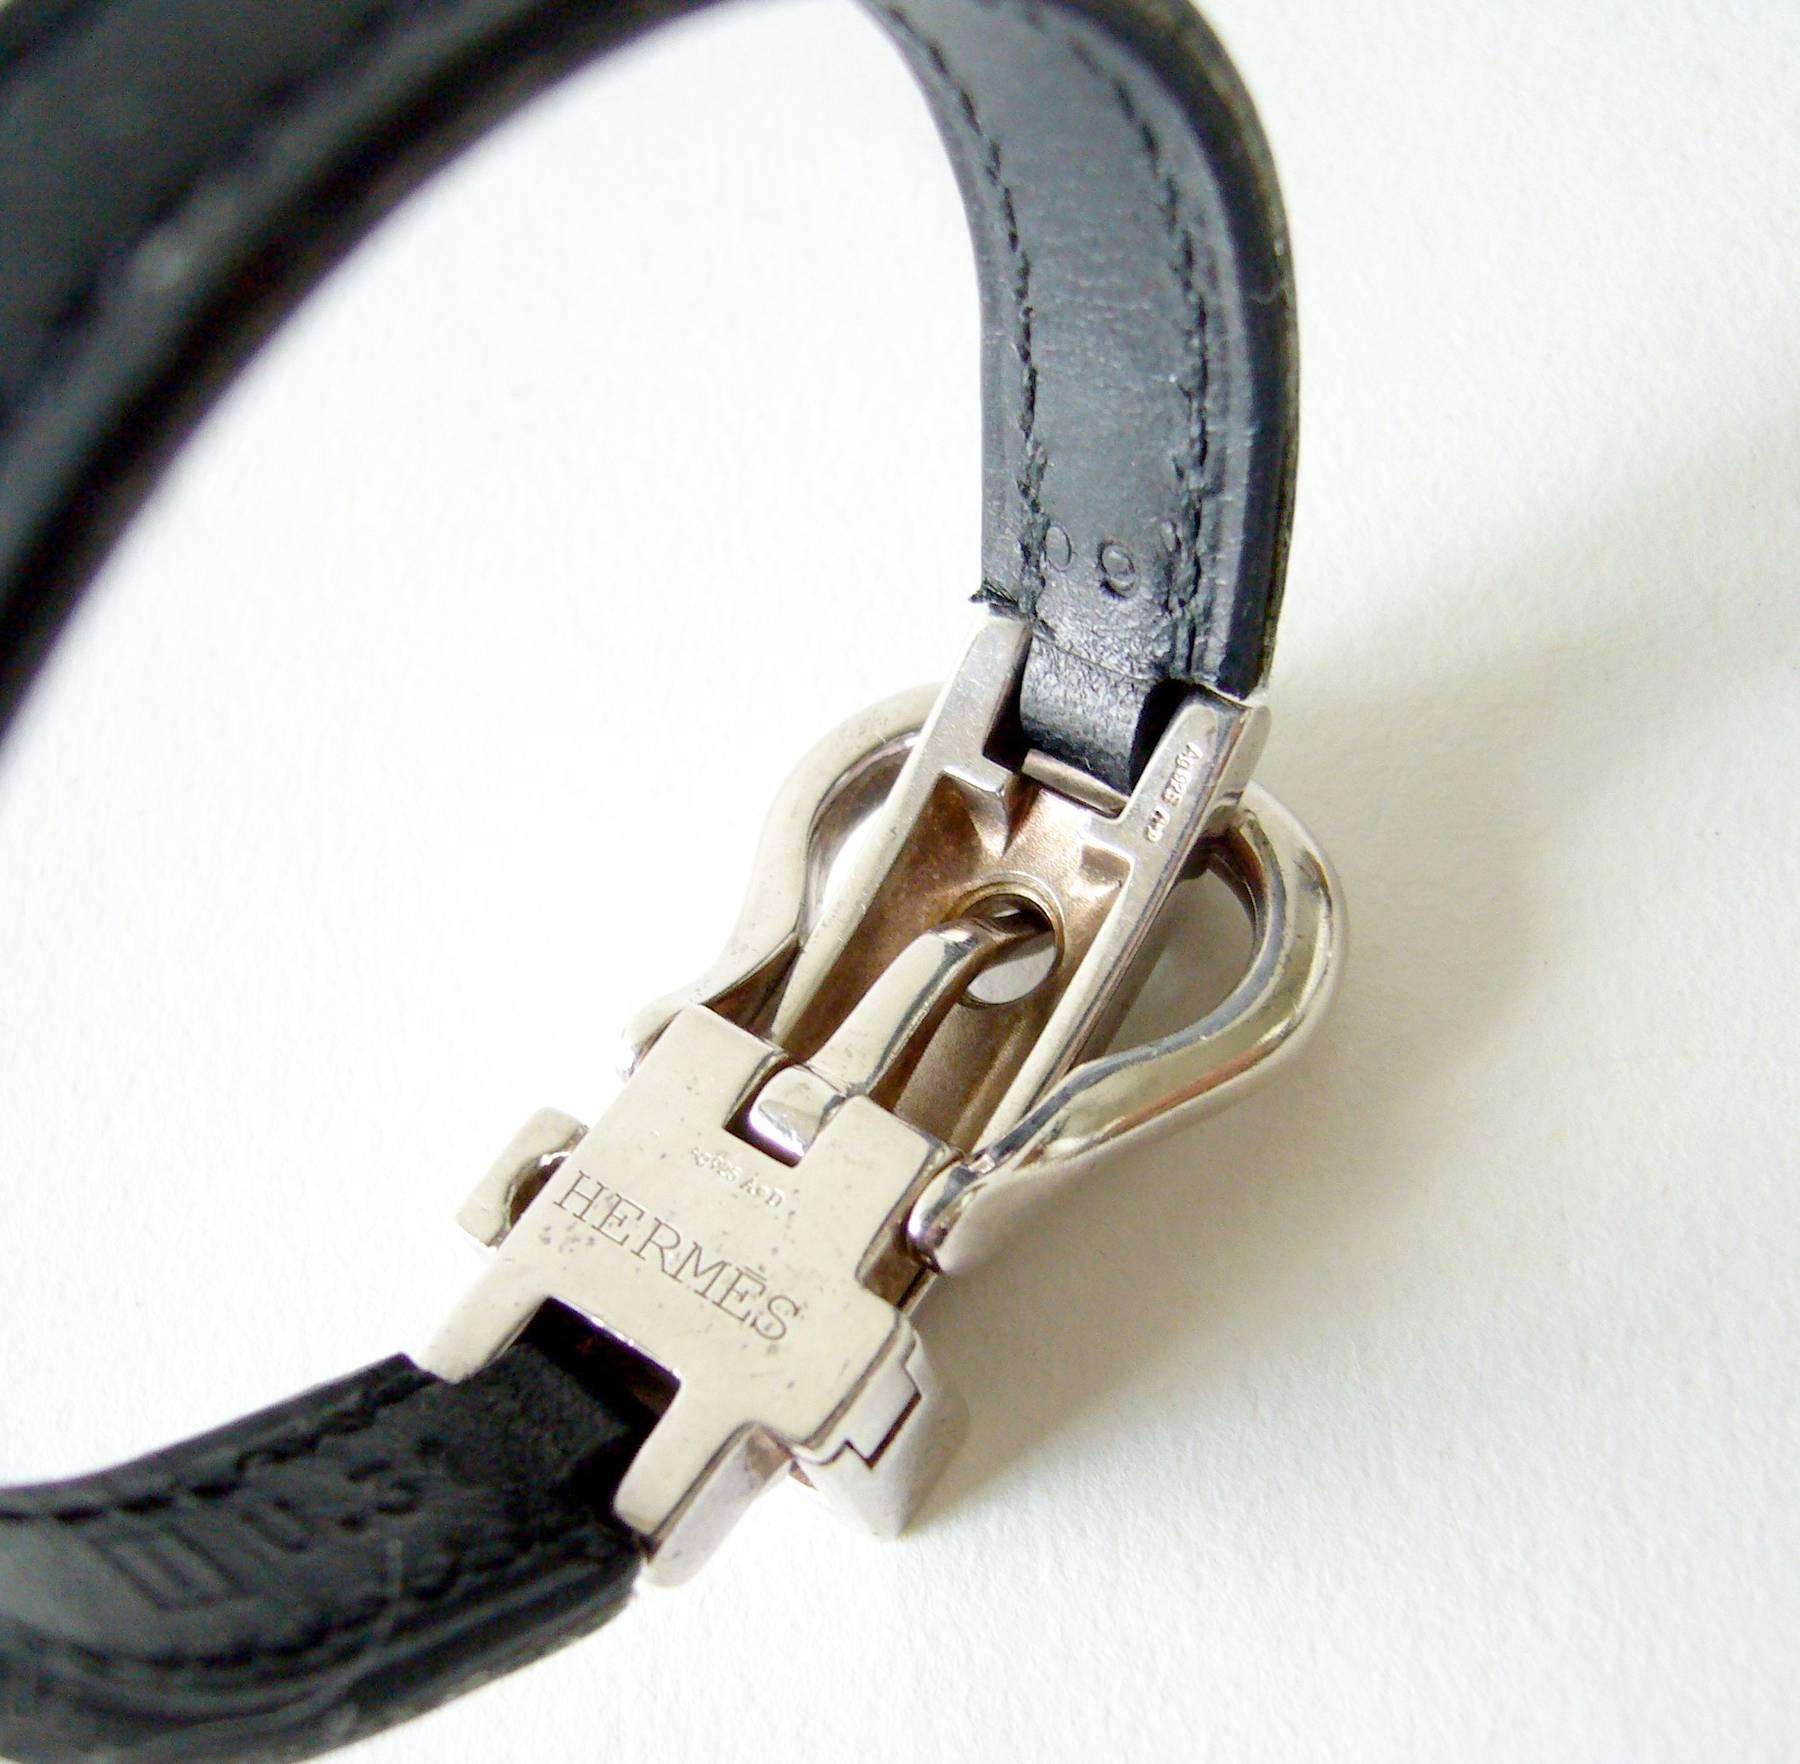 Hermes sterling silver and leather saddle buckle bracelet with locking safety.  Bracelet has 7